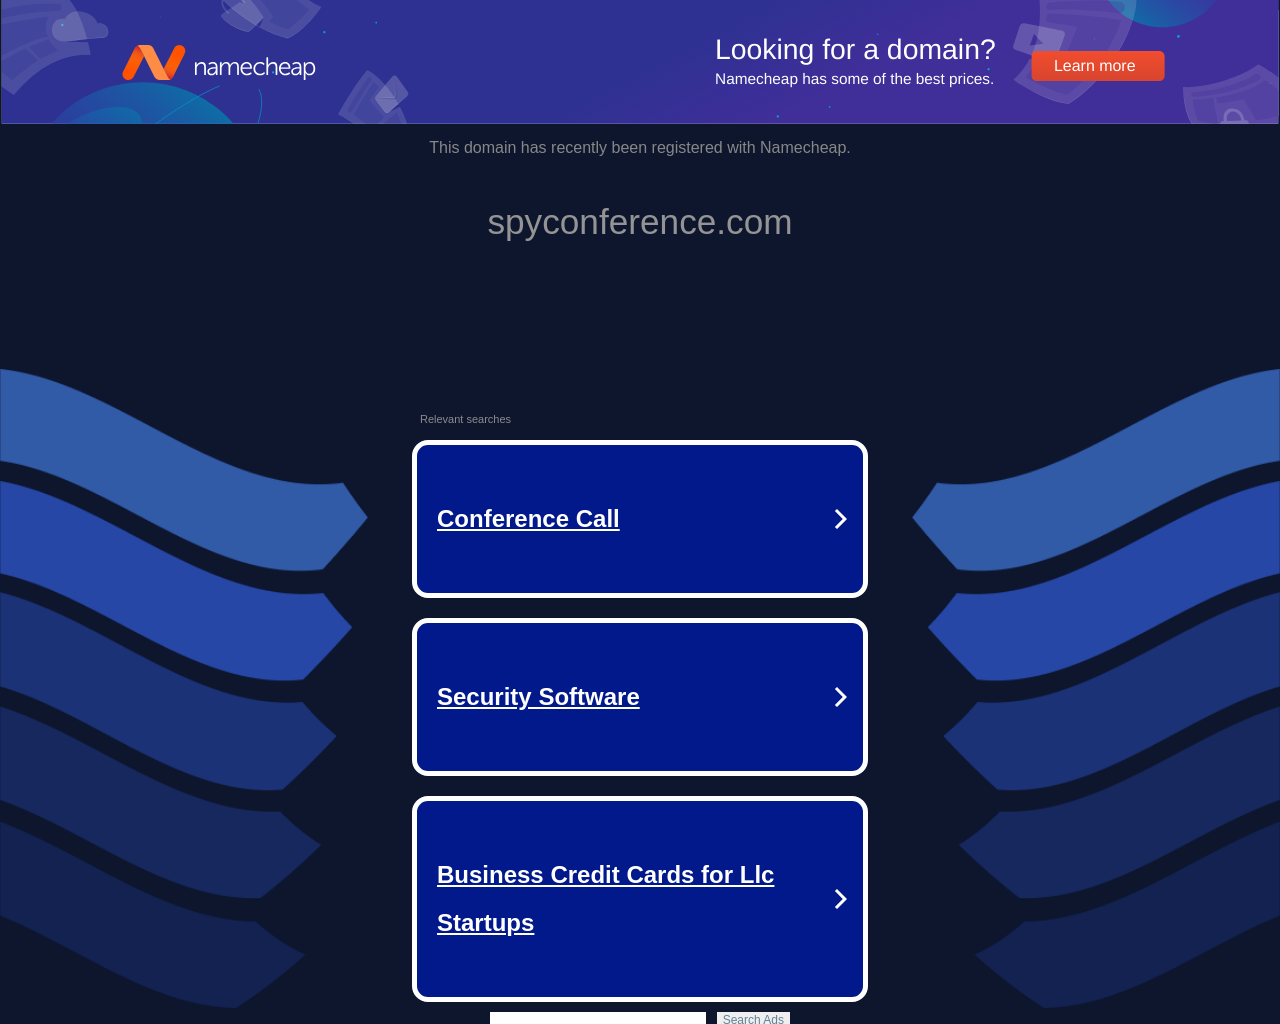 spyconference.com